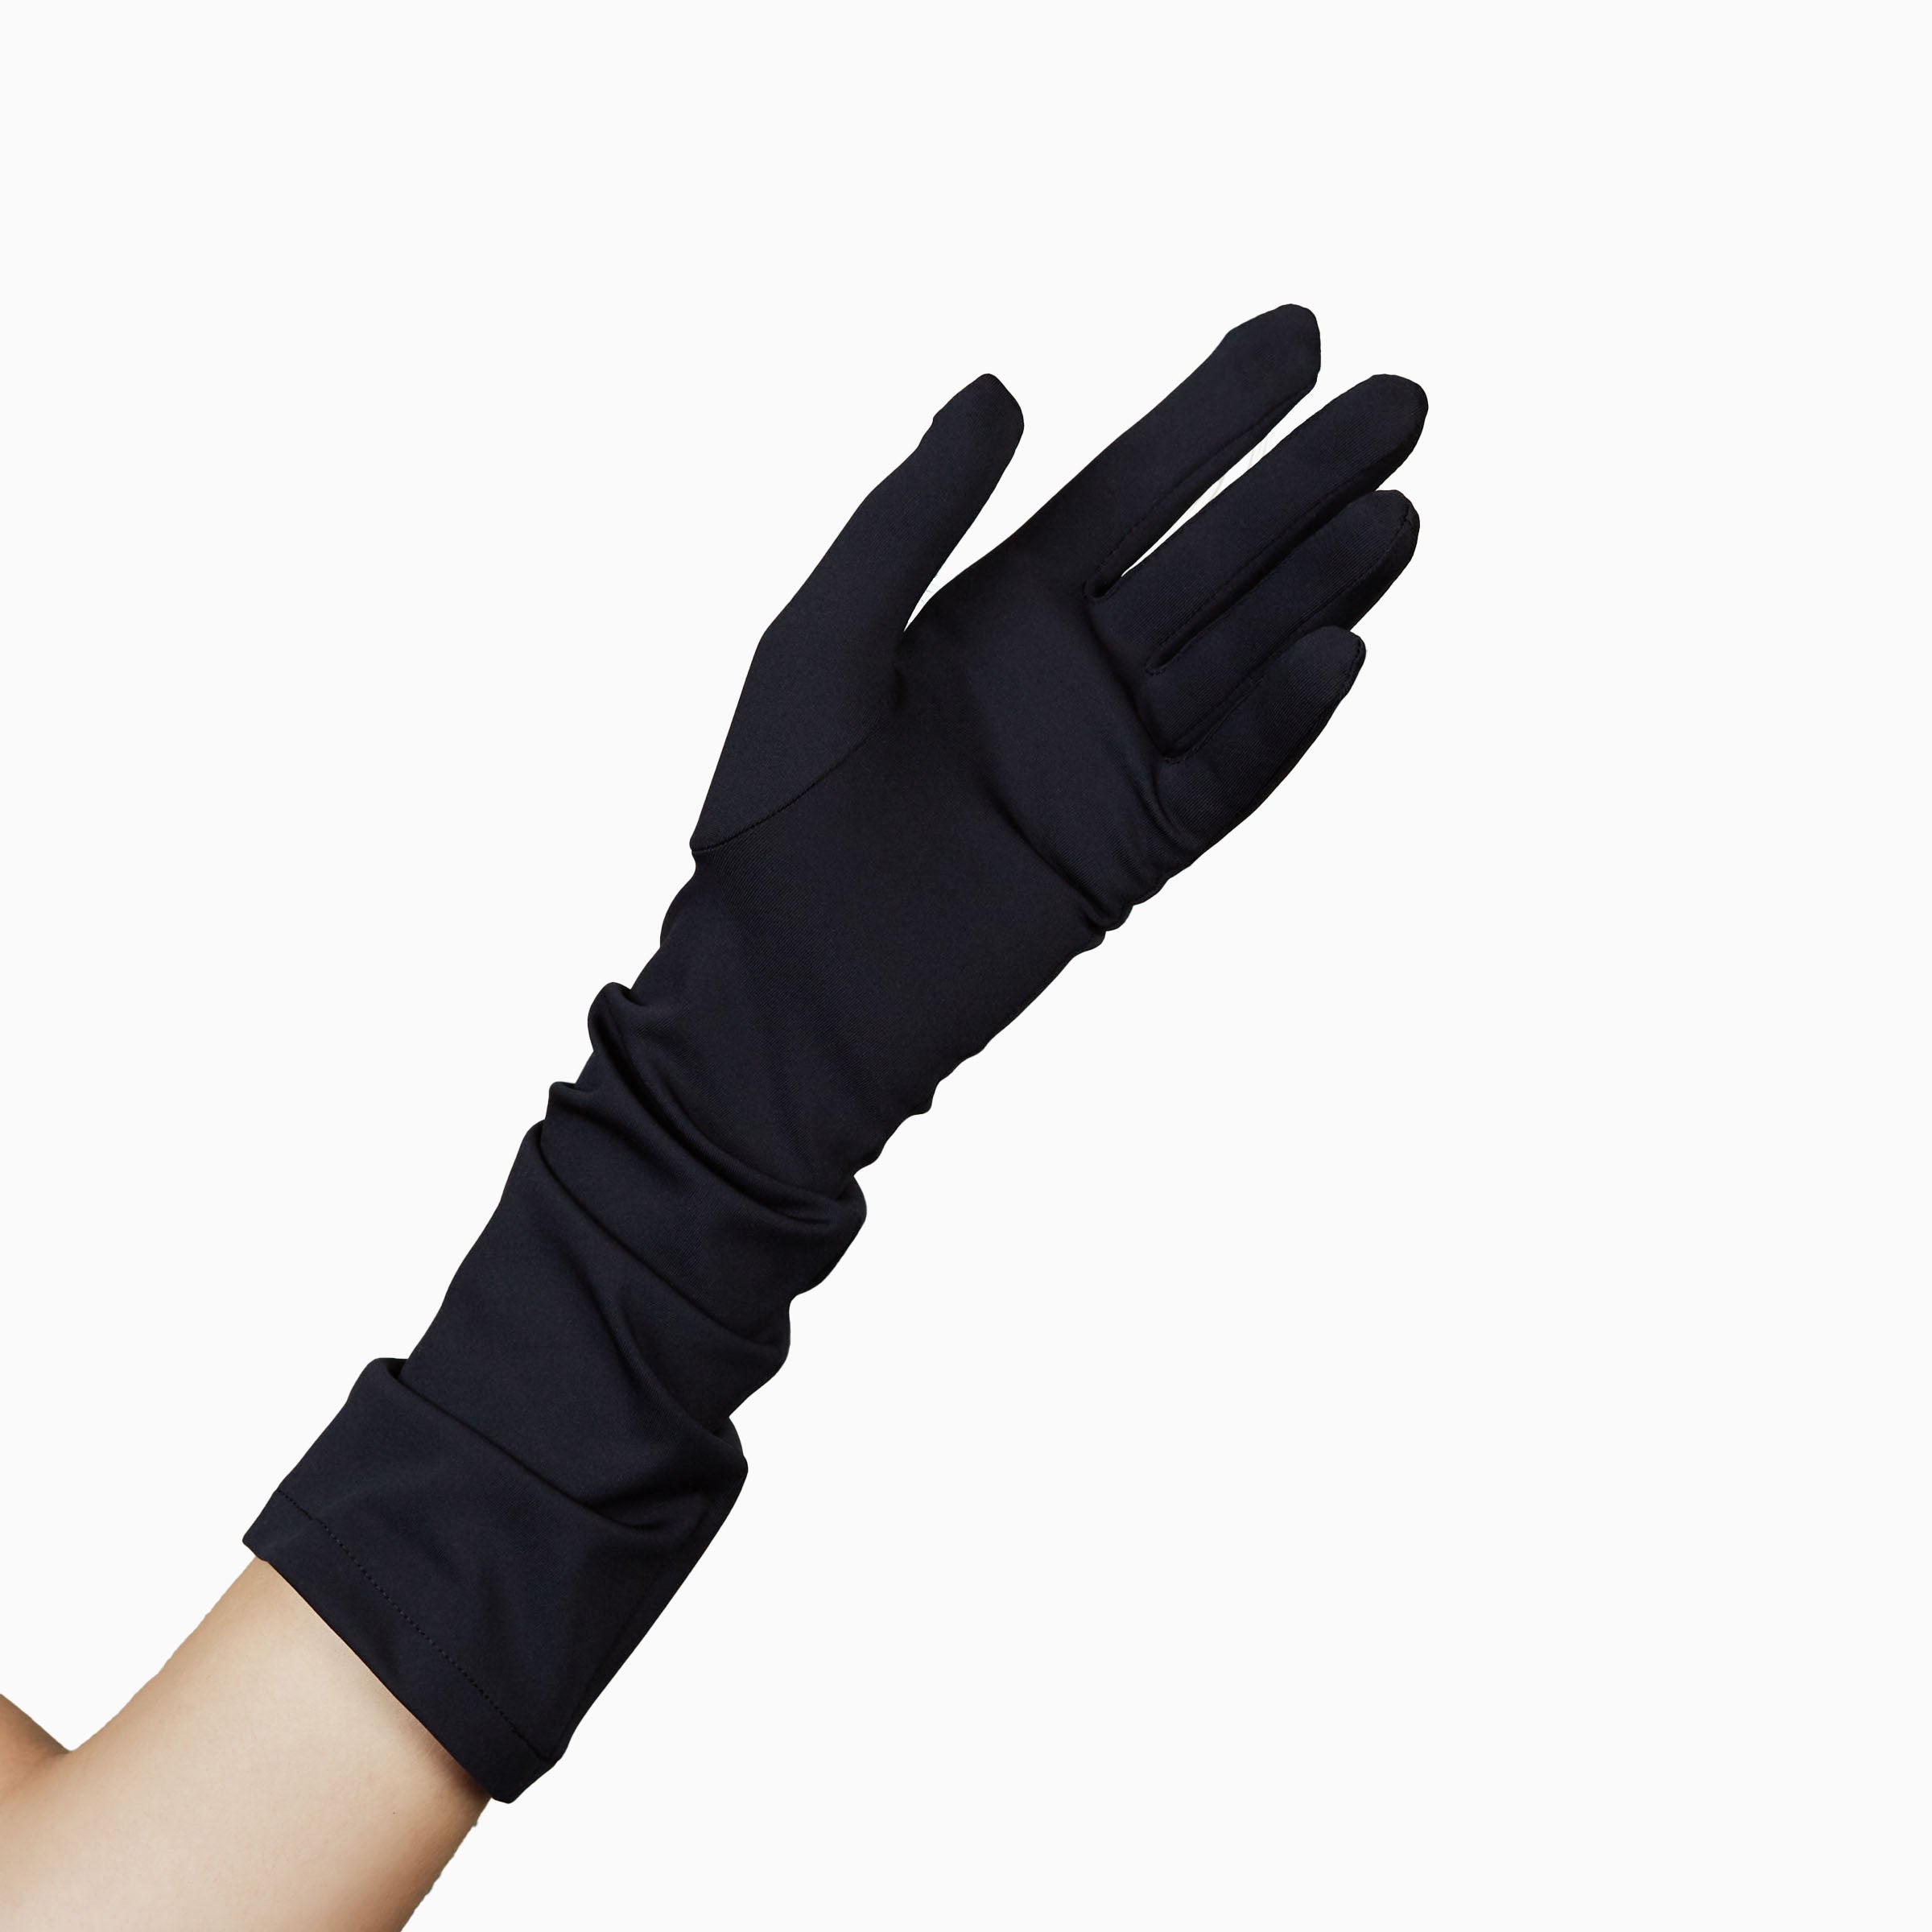 THE JILL black women's mid-length glove.